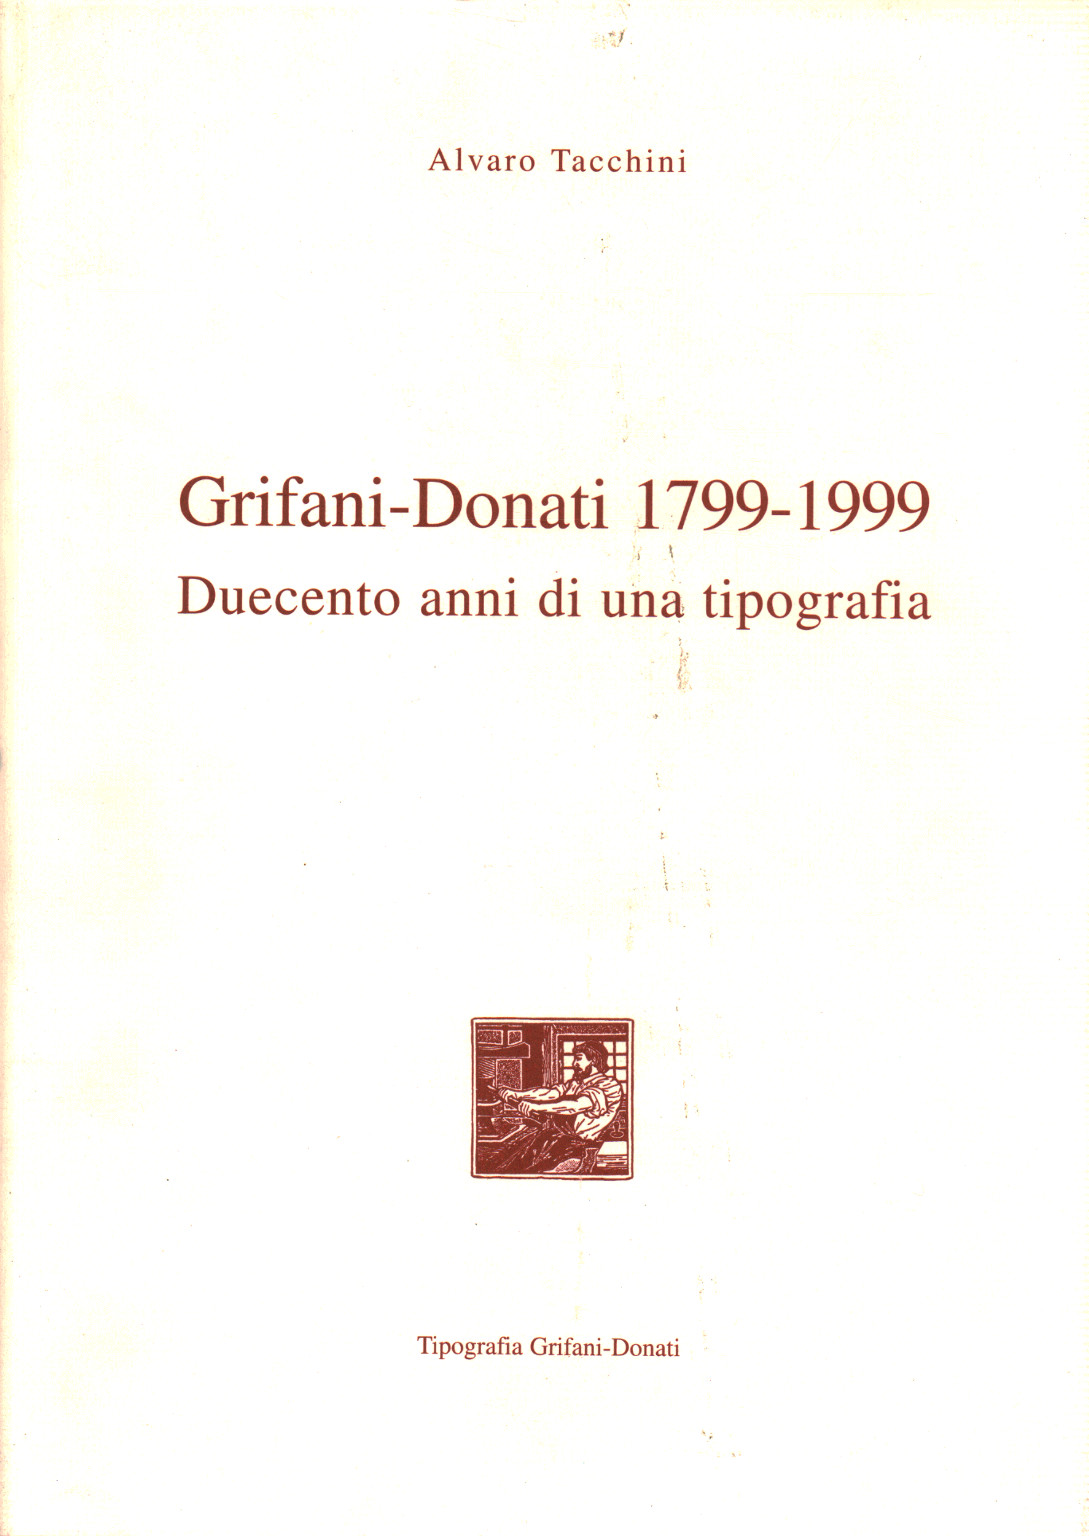 Grifani- Donati 1799-1999, s.a.